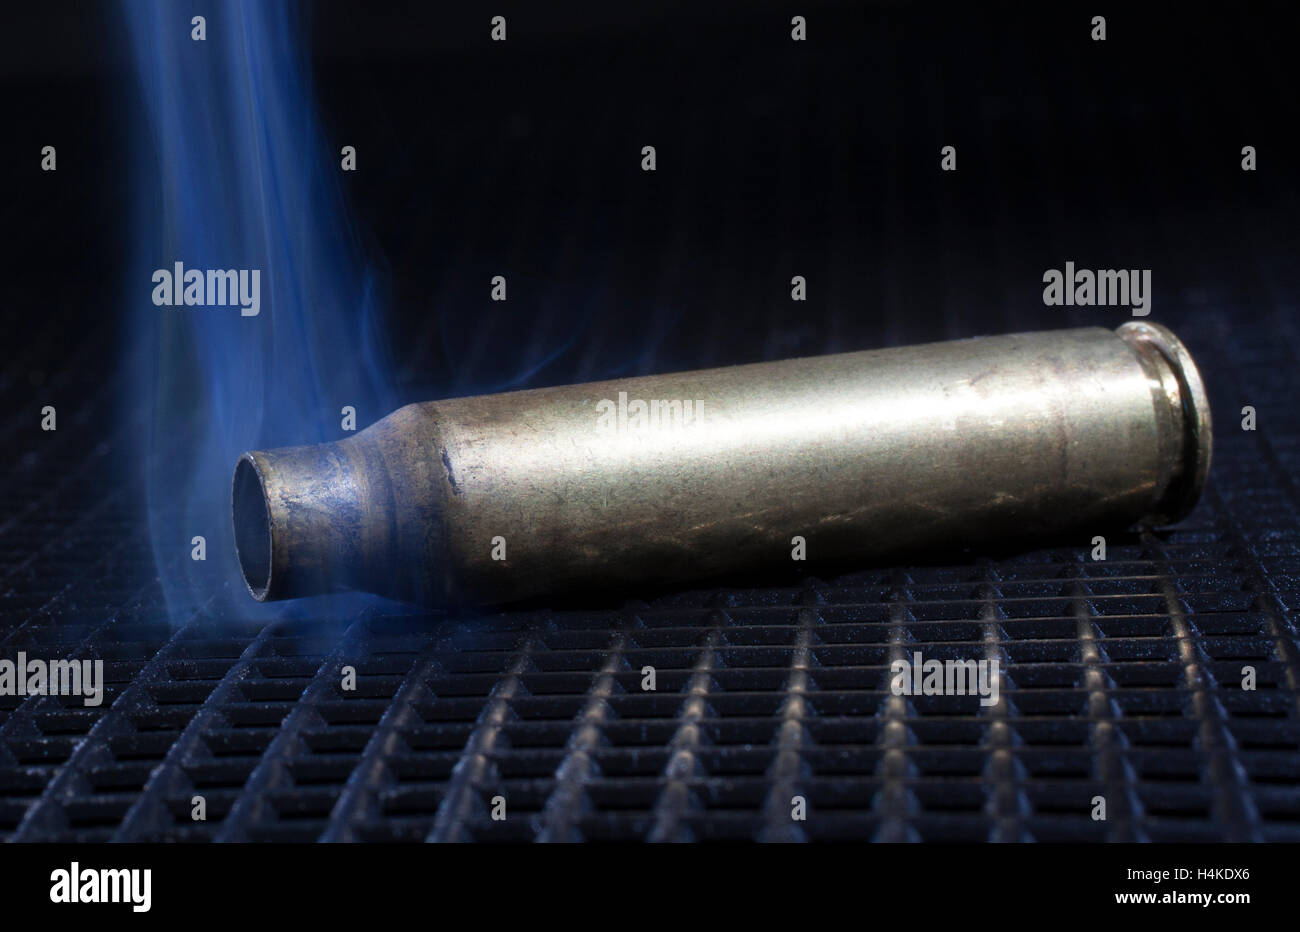 Empty Bullet Shell Casings, on a Black Background, Smoke Stock Photo -  Image of flight, background: 103425280